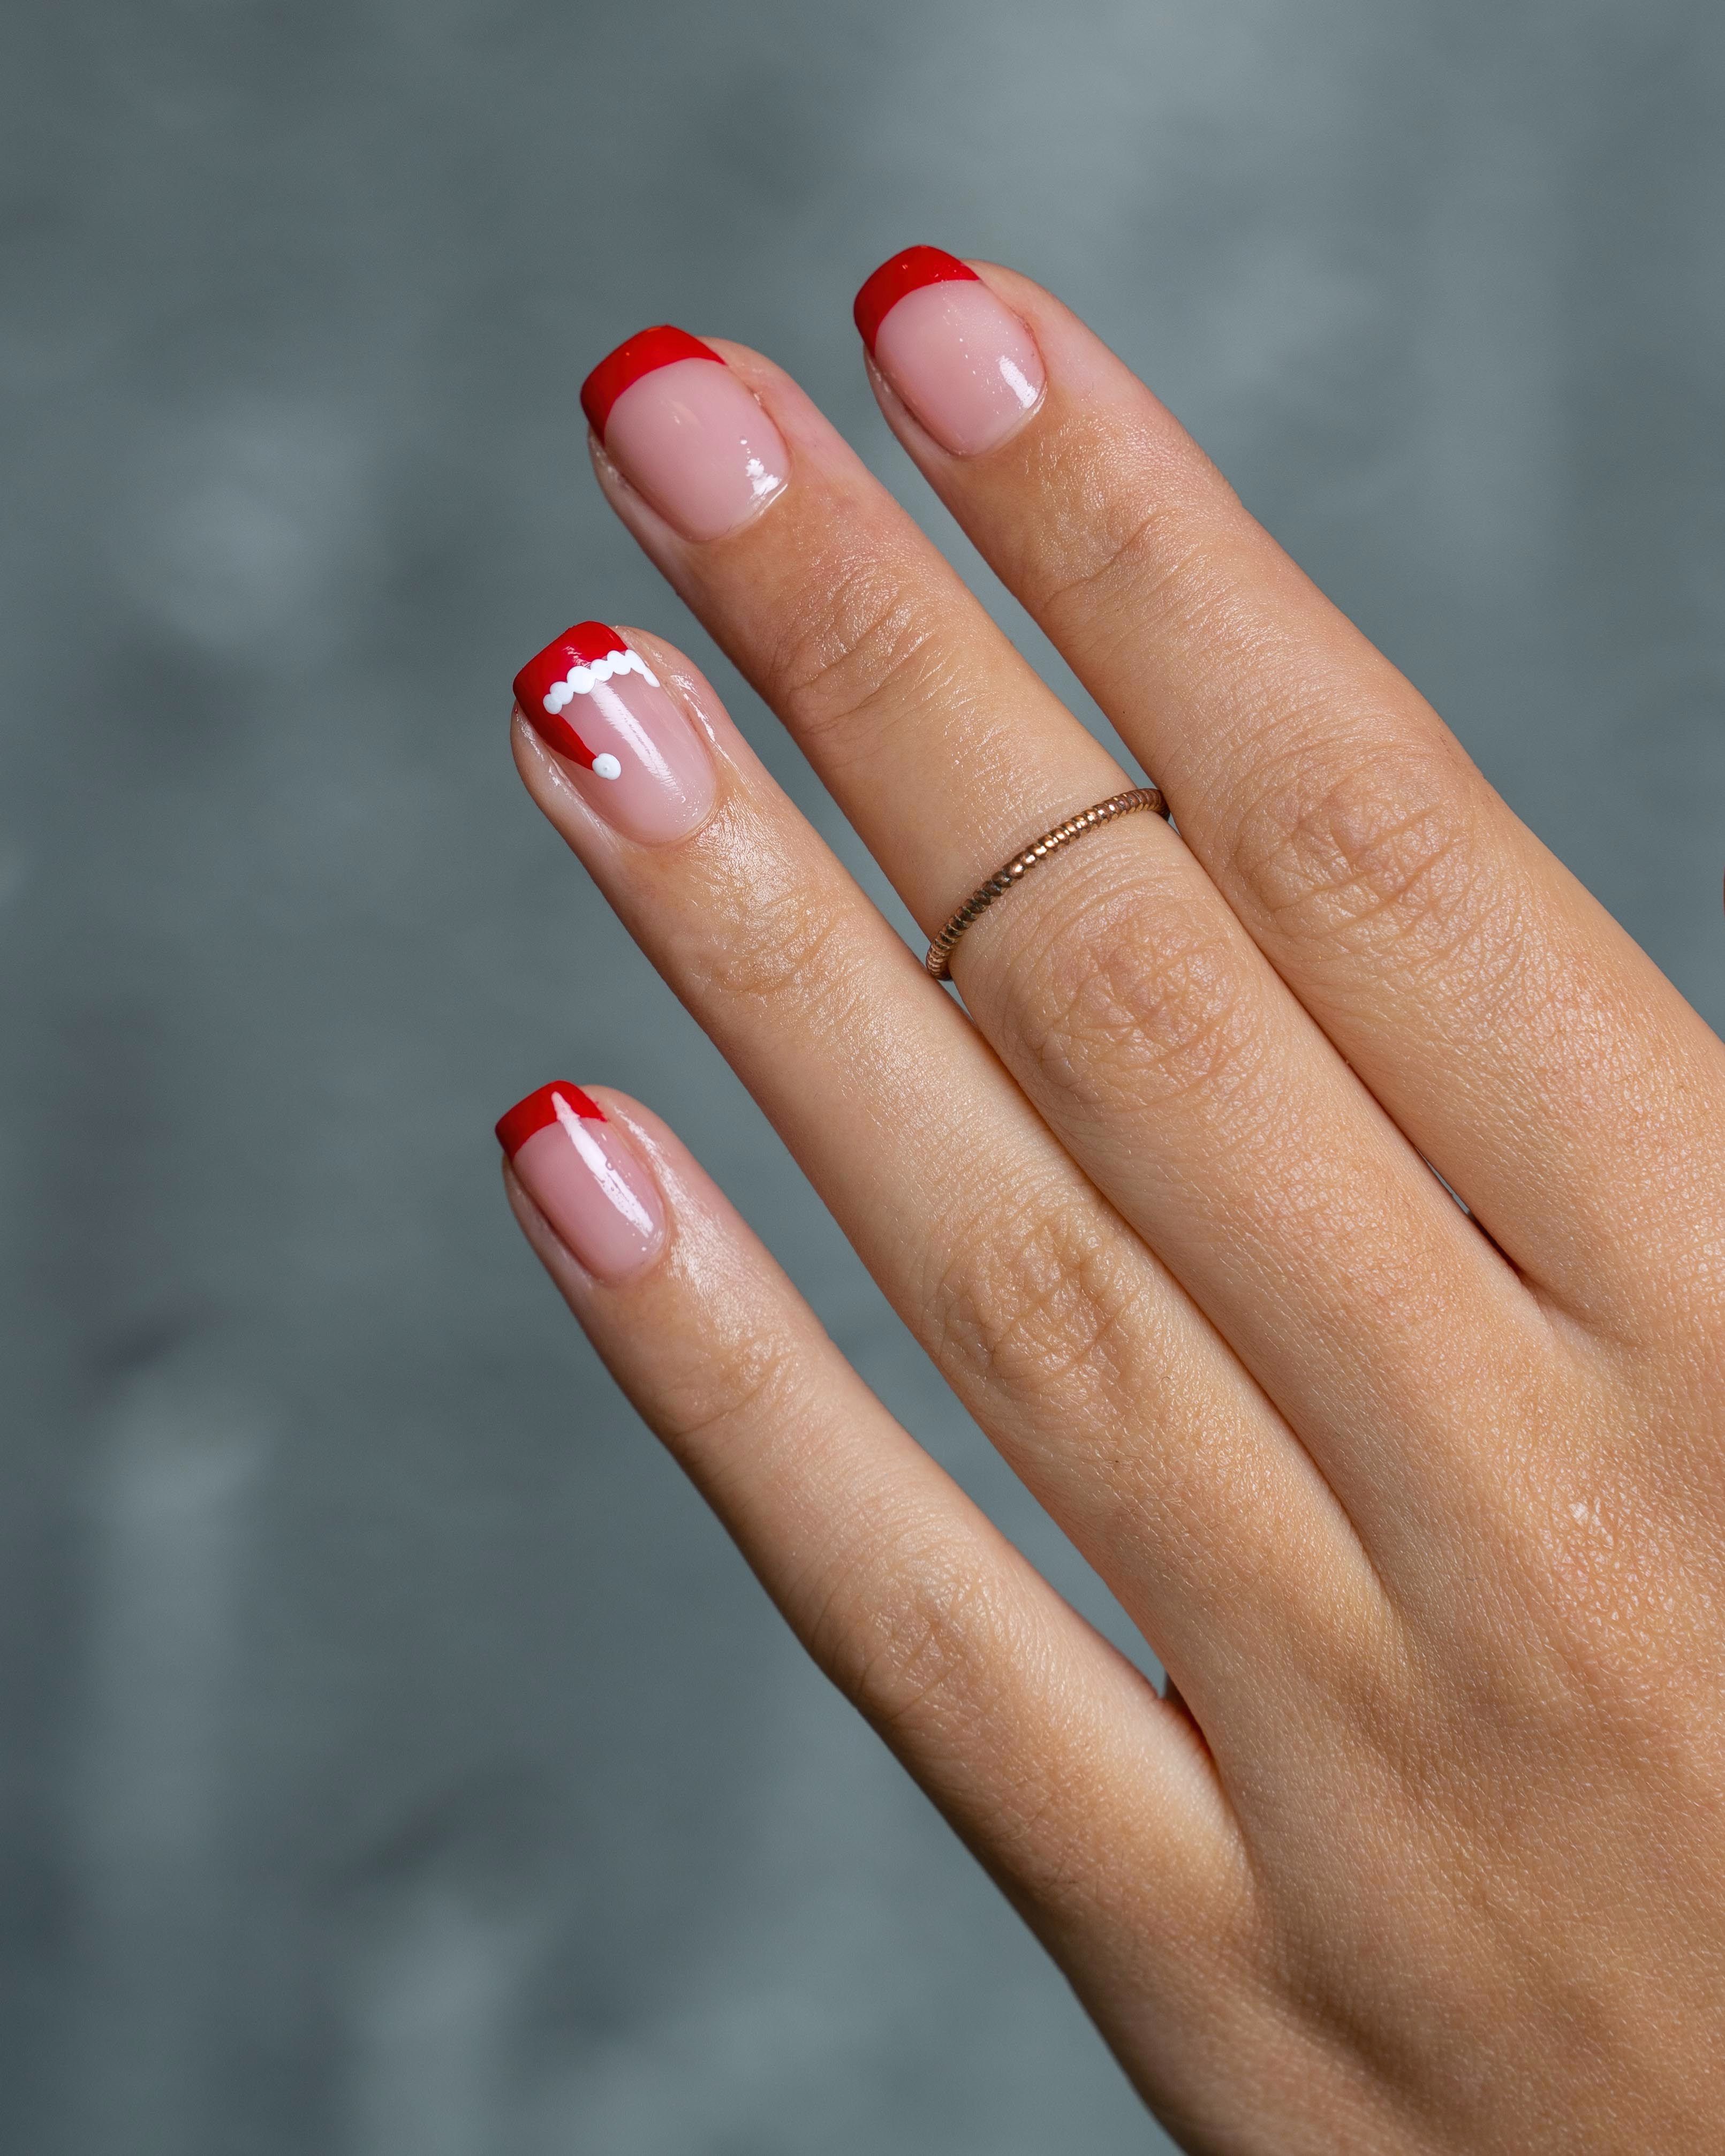 Winter nail designs: 19 ideas that'll get you feeling festive